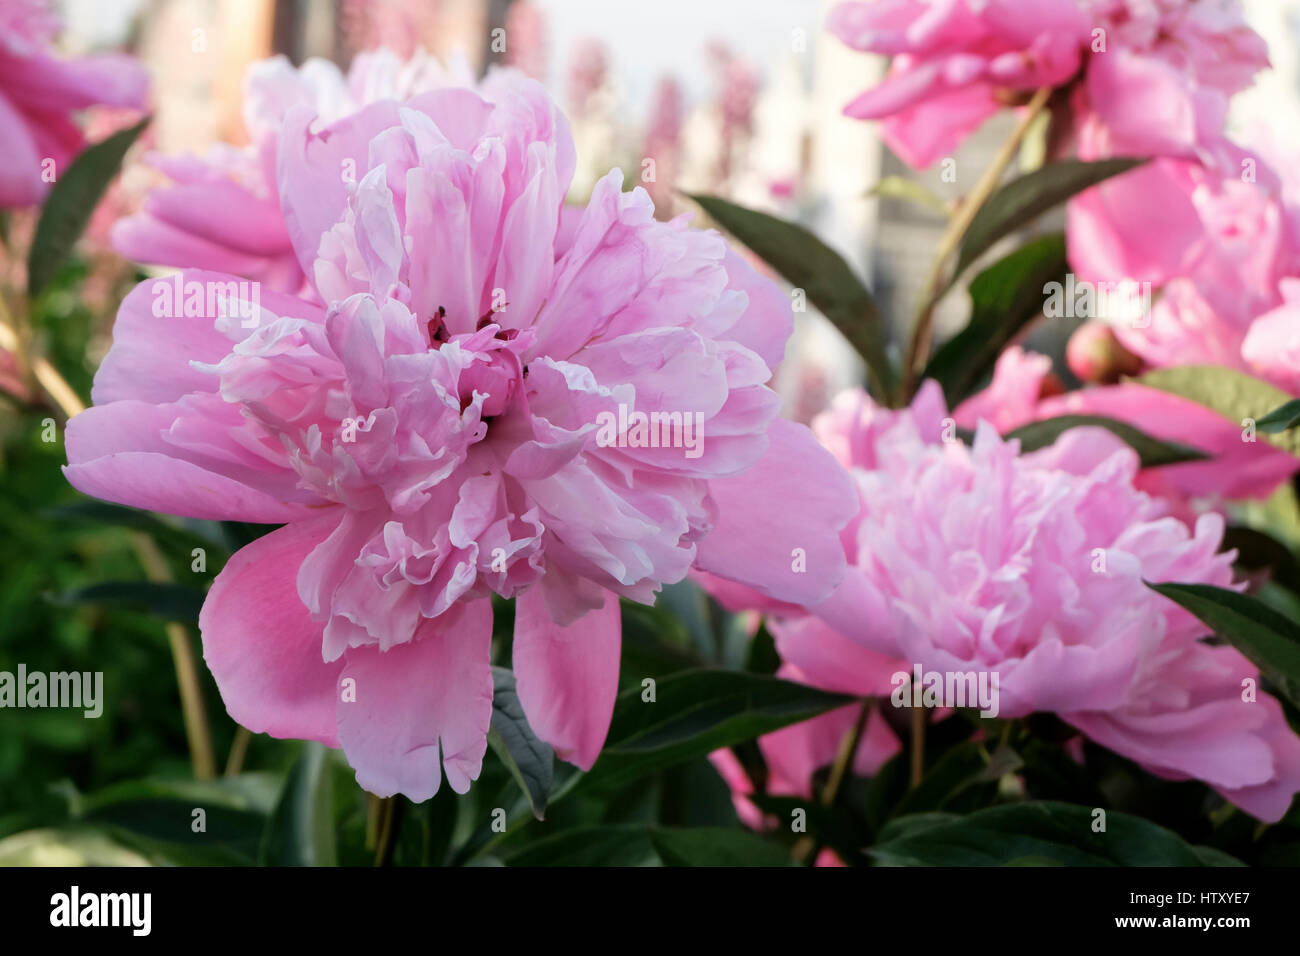 Flowering pink peony flowers. Stock Photo